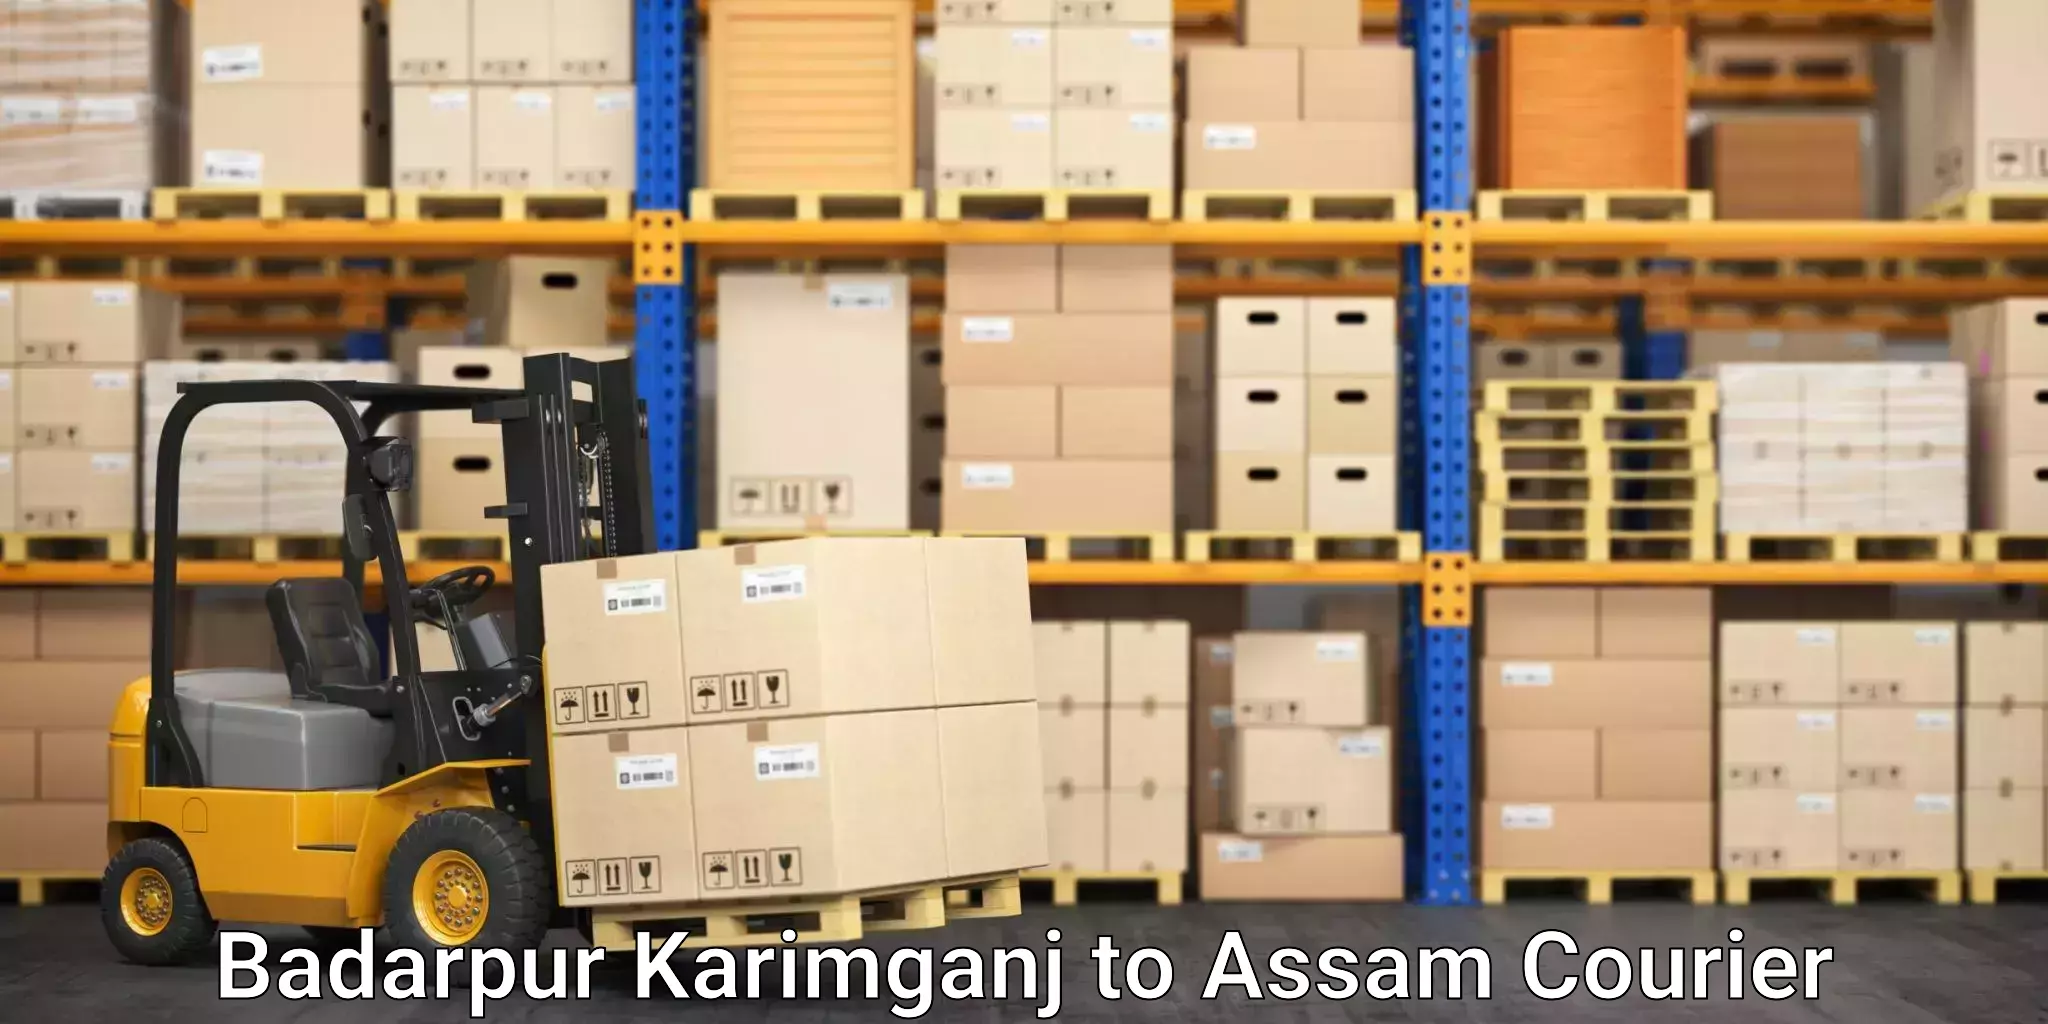 Local delivery service Badarpur Karimganj to Assam